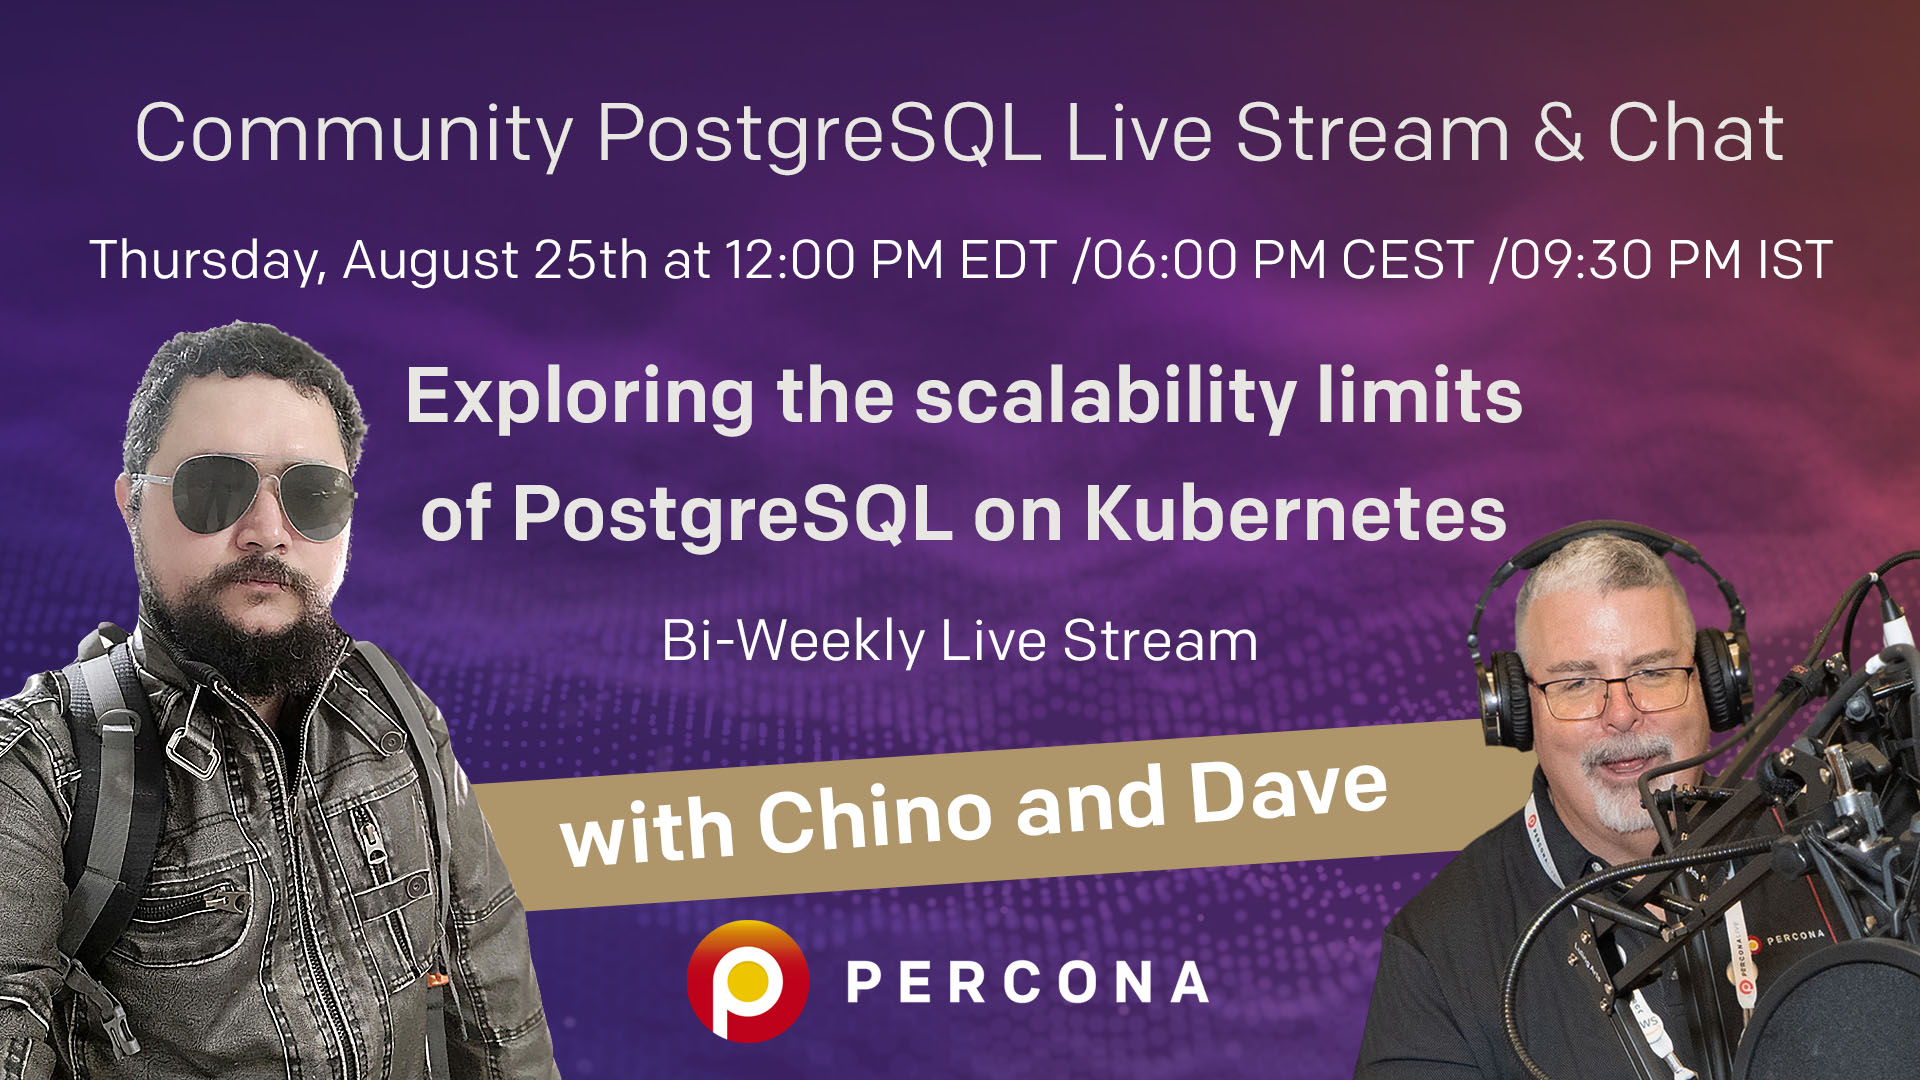 Percona Community PostgreSQL Live Stream & Chat - August 25th